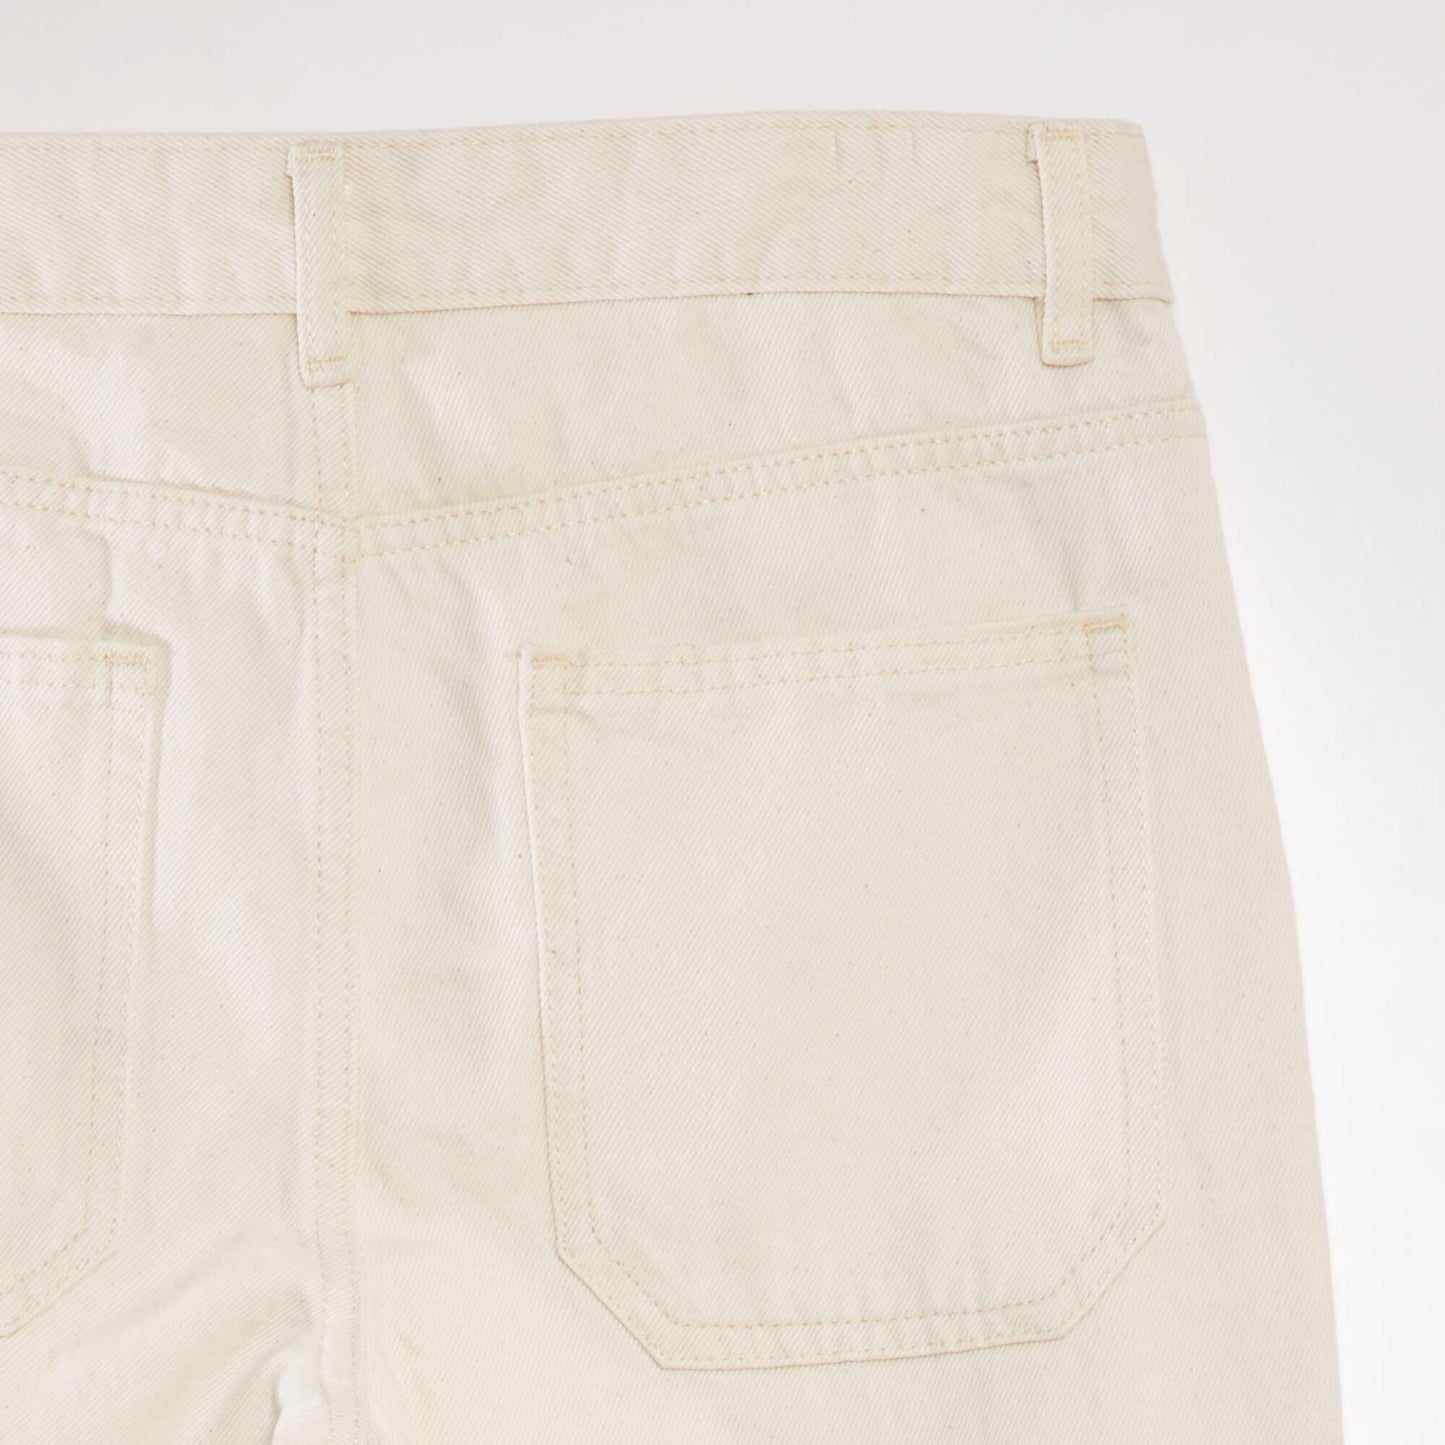 5-pocket straight-leg jeans BEIGE